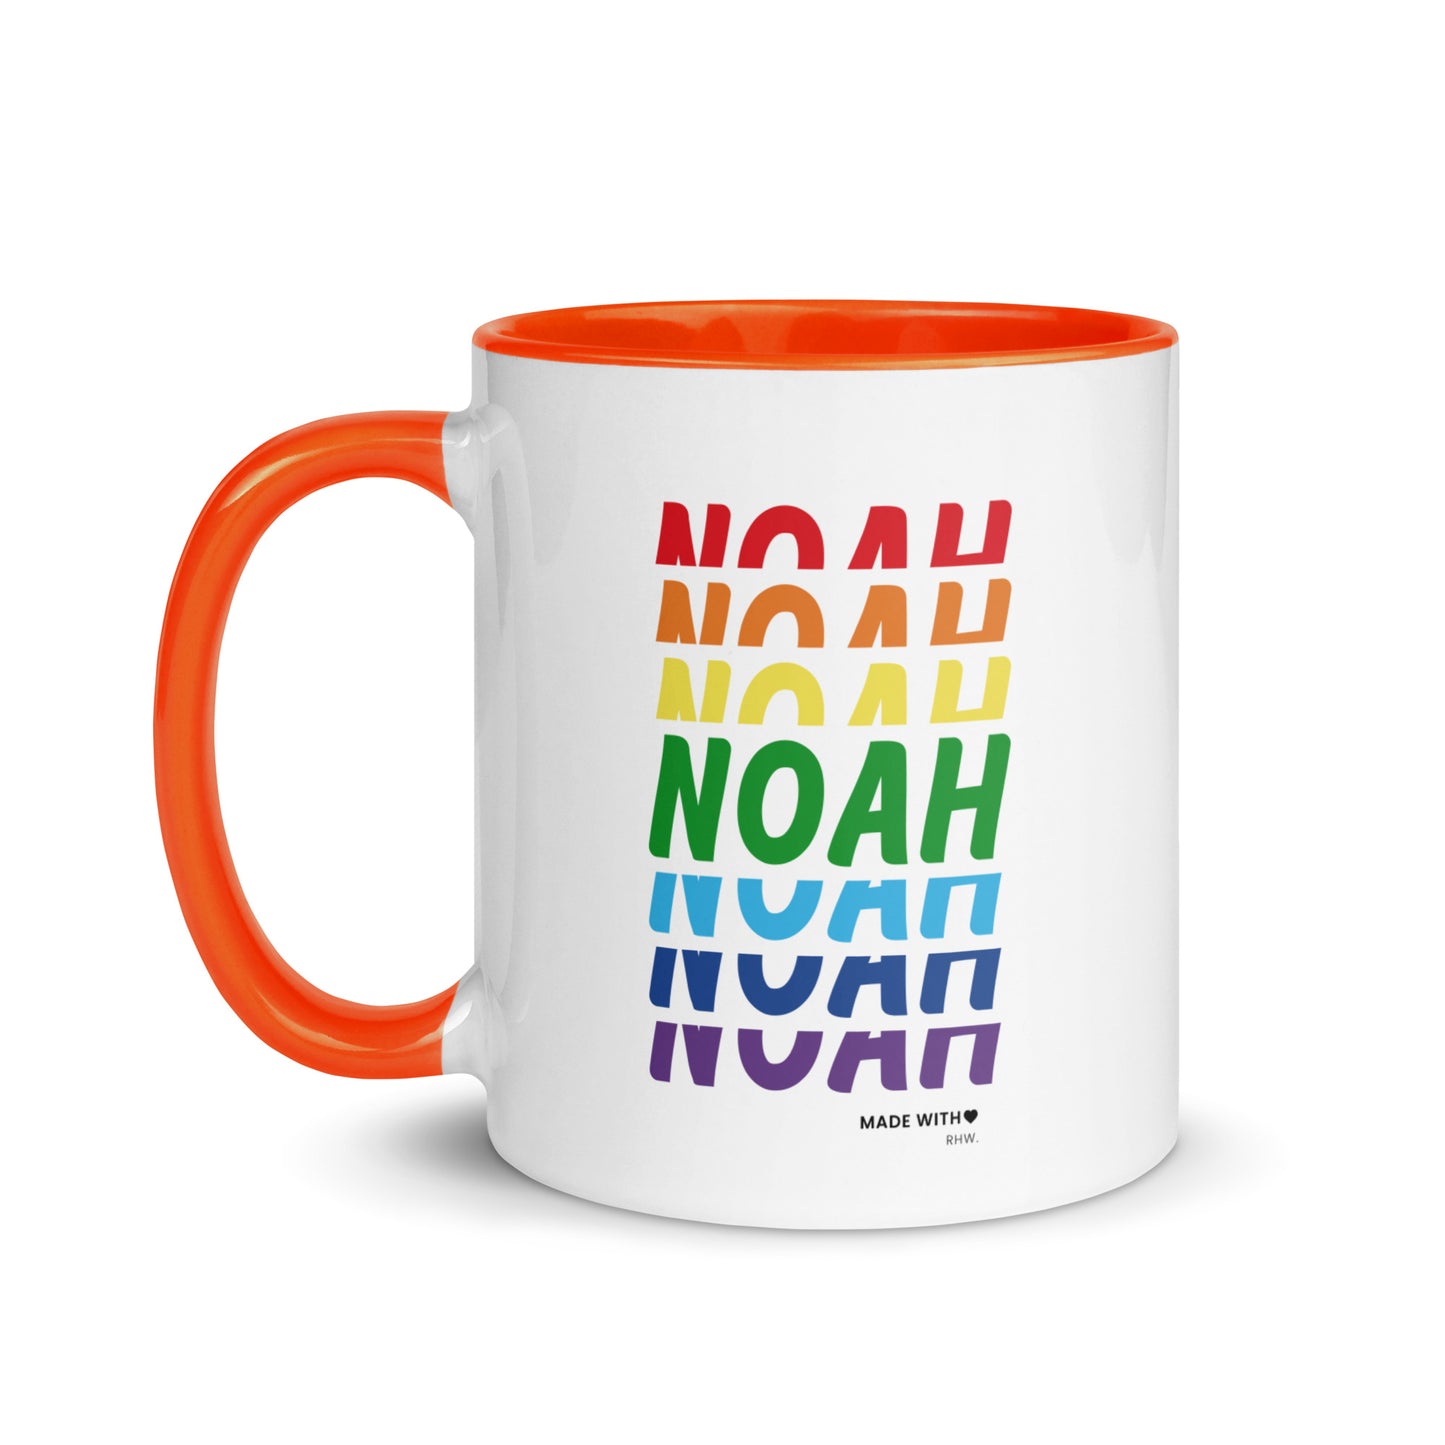 Noah Rainbow Mug with Color Inside